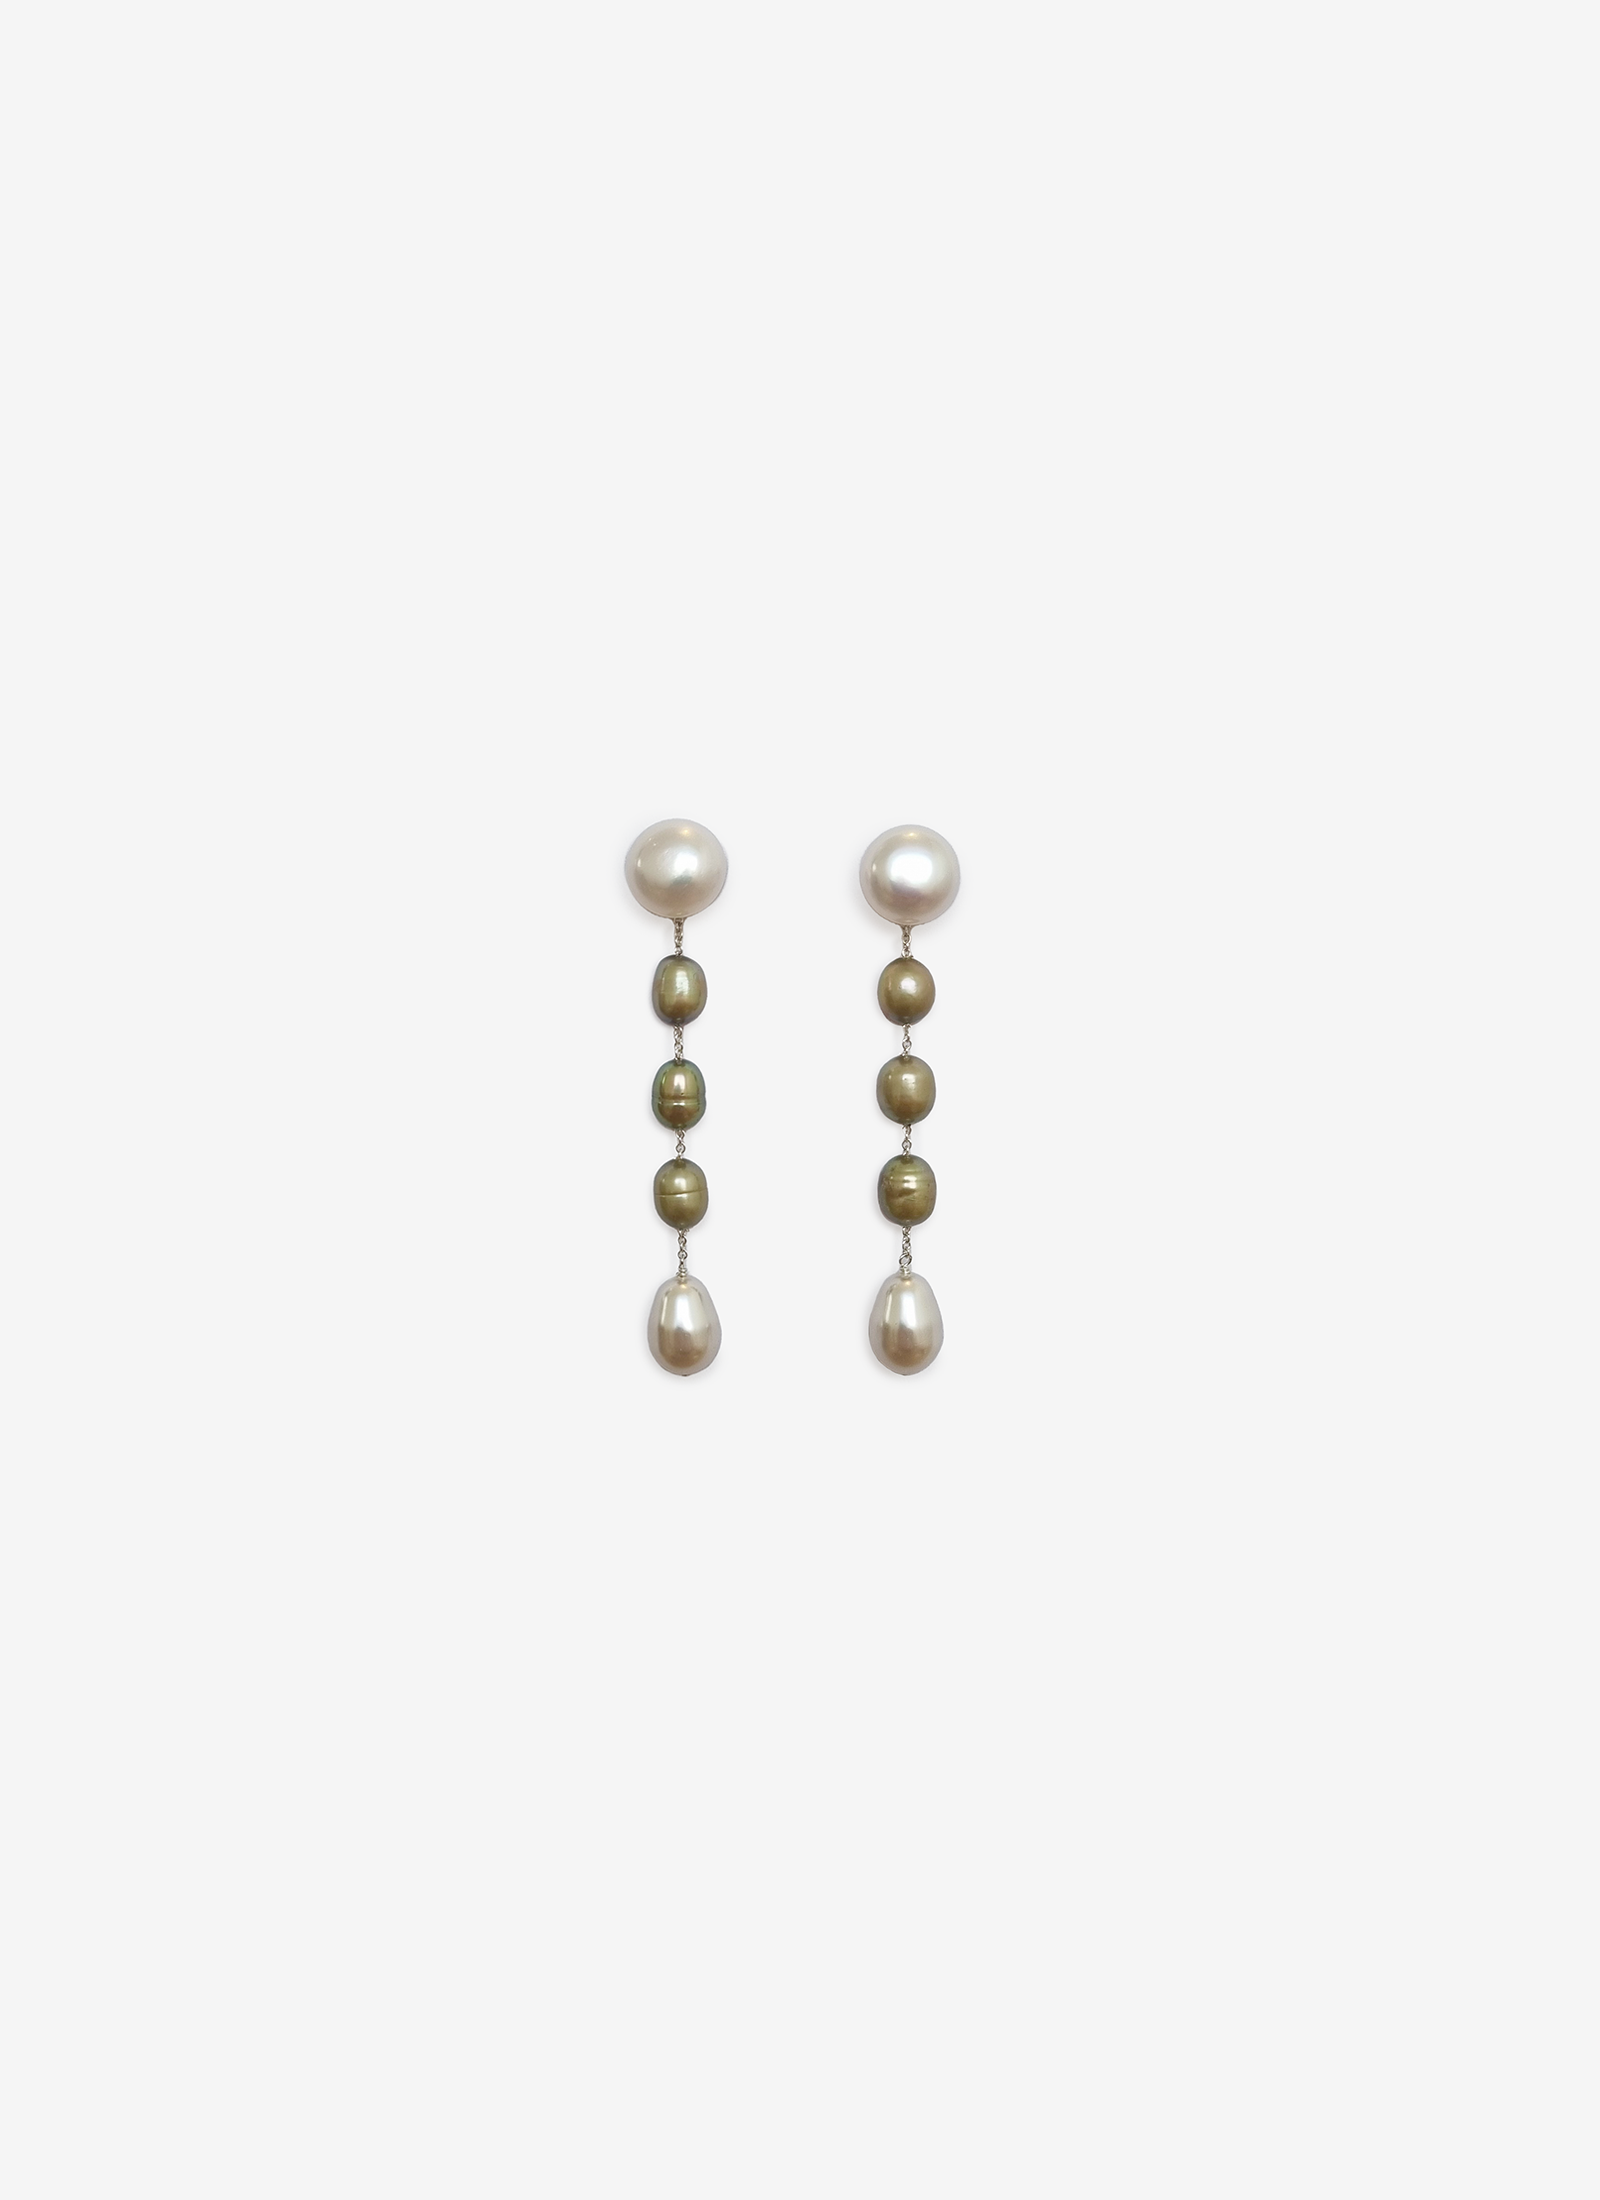 Small Passante Earrings - Pistachio Pearl